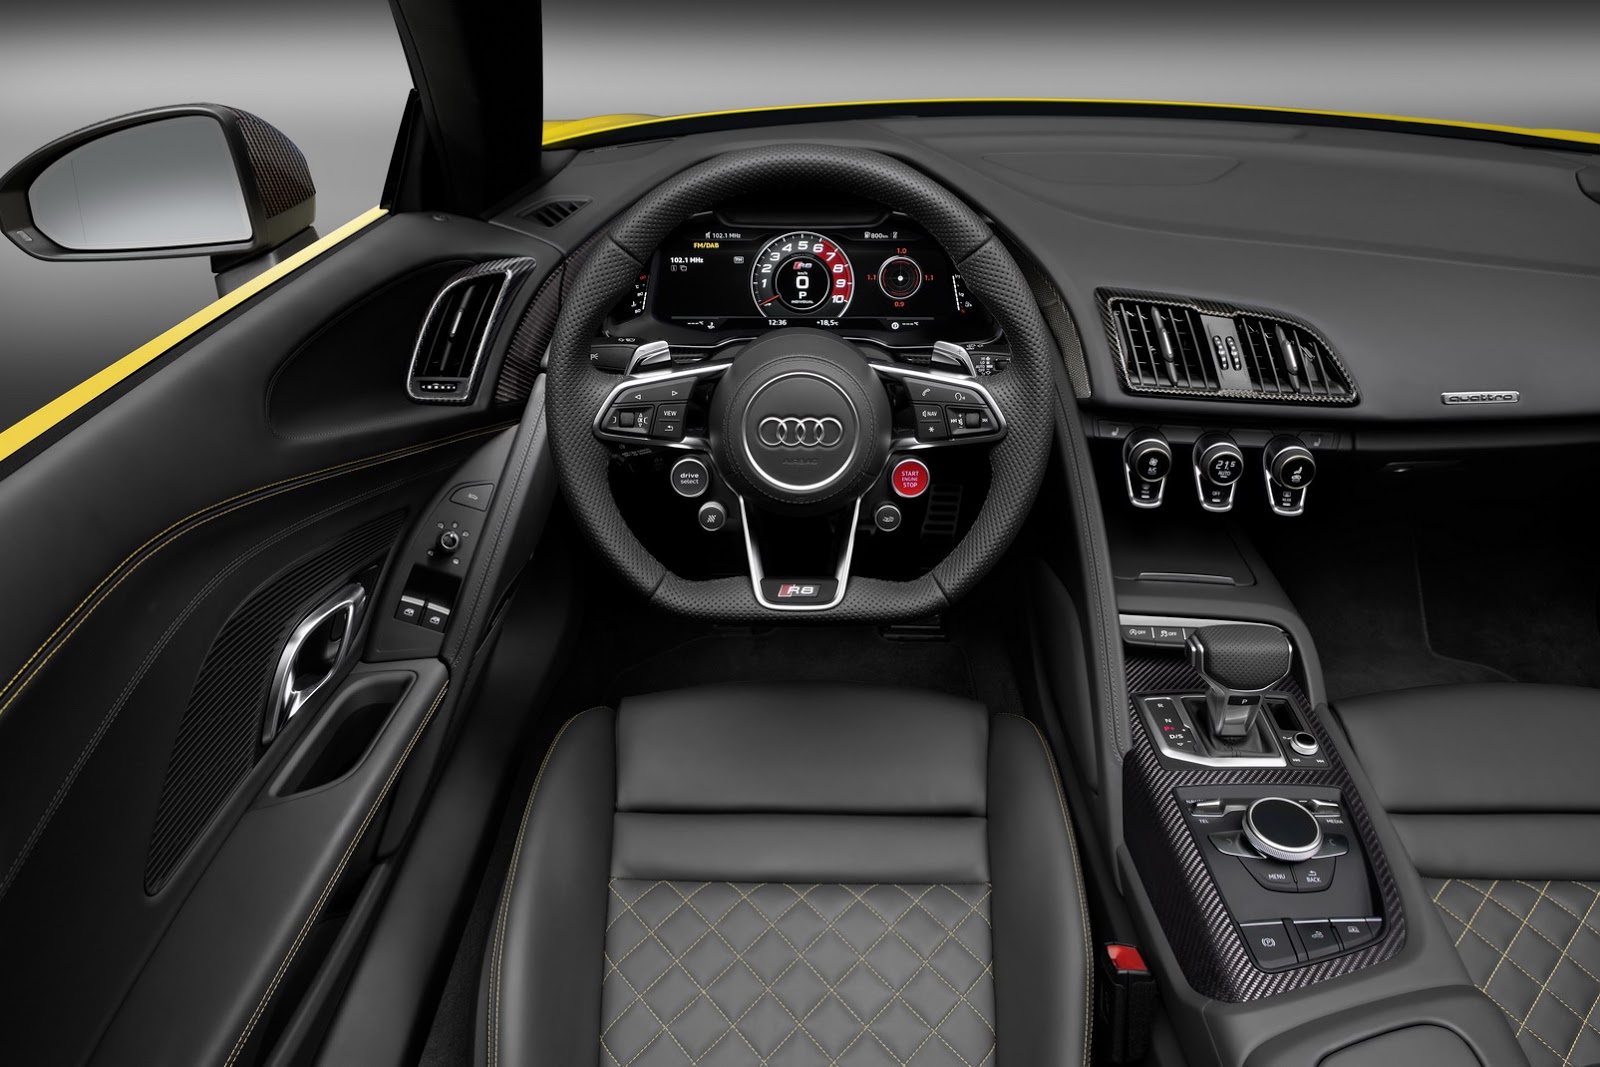 Audi R8 Spyder 2017